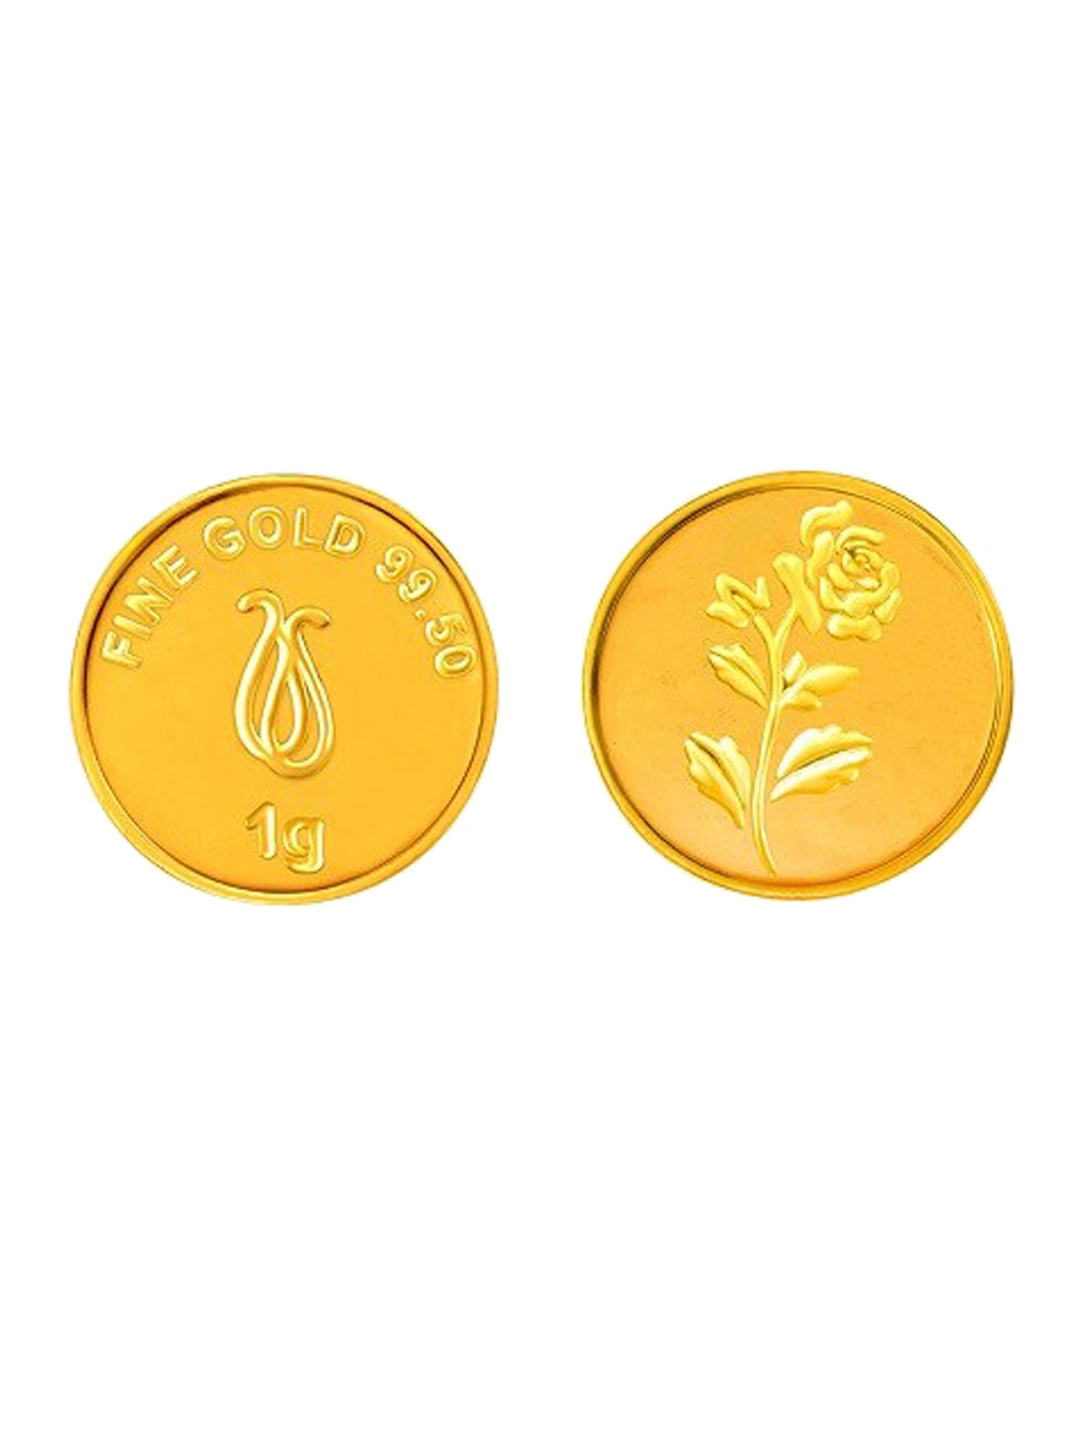 Buy SENCO 24KT Gold Coin 1 Gram - Gold Coin for Unisex 22786844 | Myntra